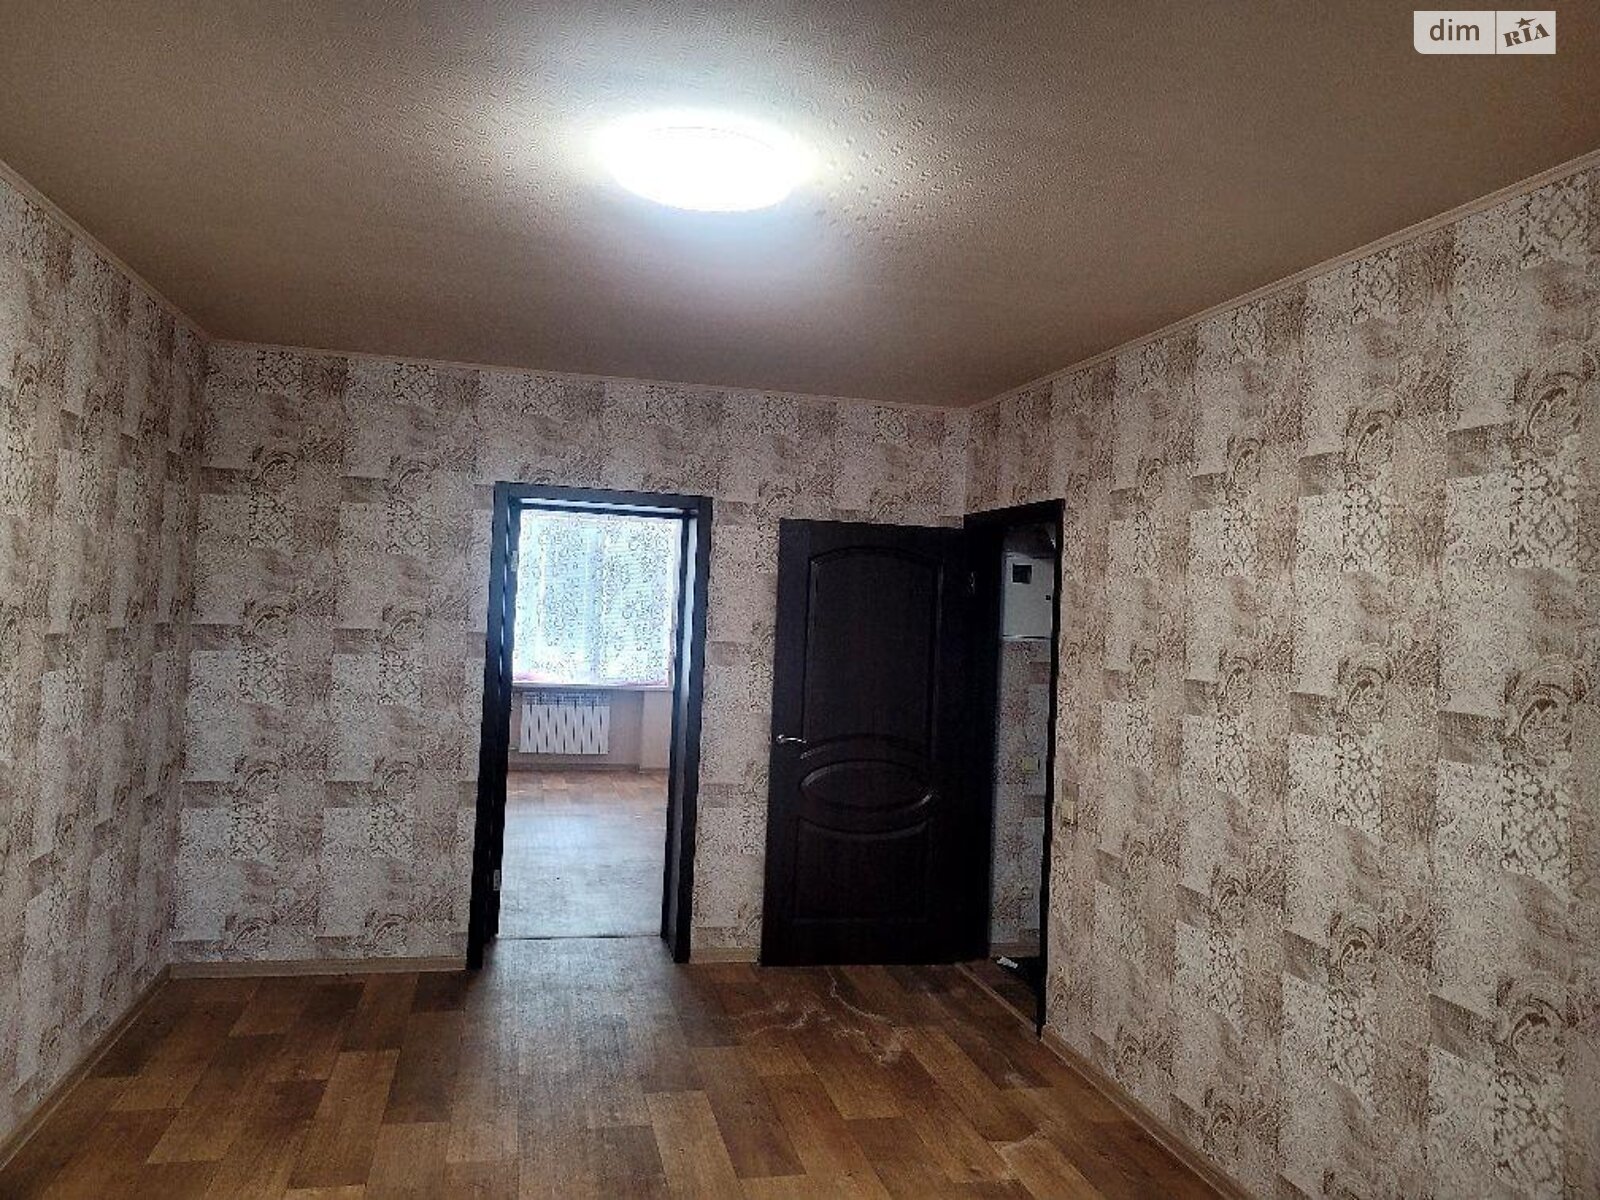 Продаж двокімнатної квартири в Харкові, на просп. Науки 29, район Павлове Поле фото 1